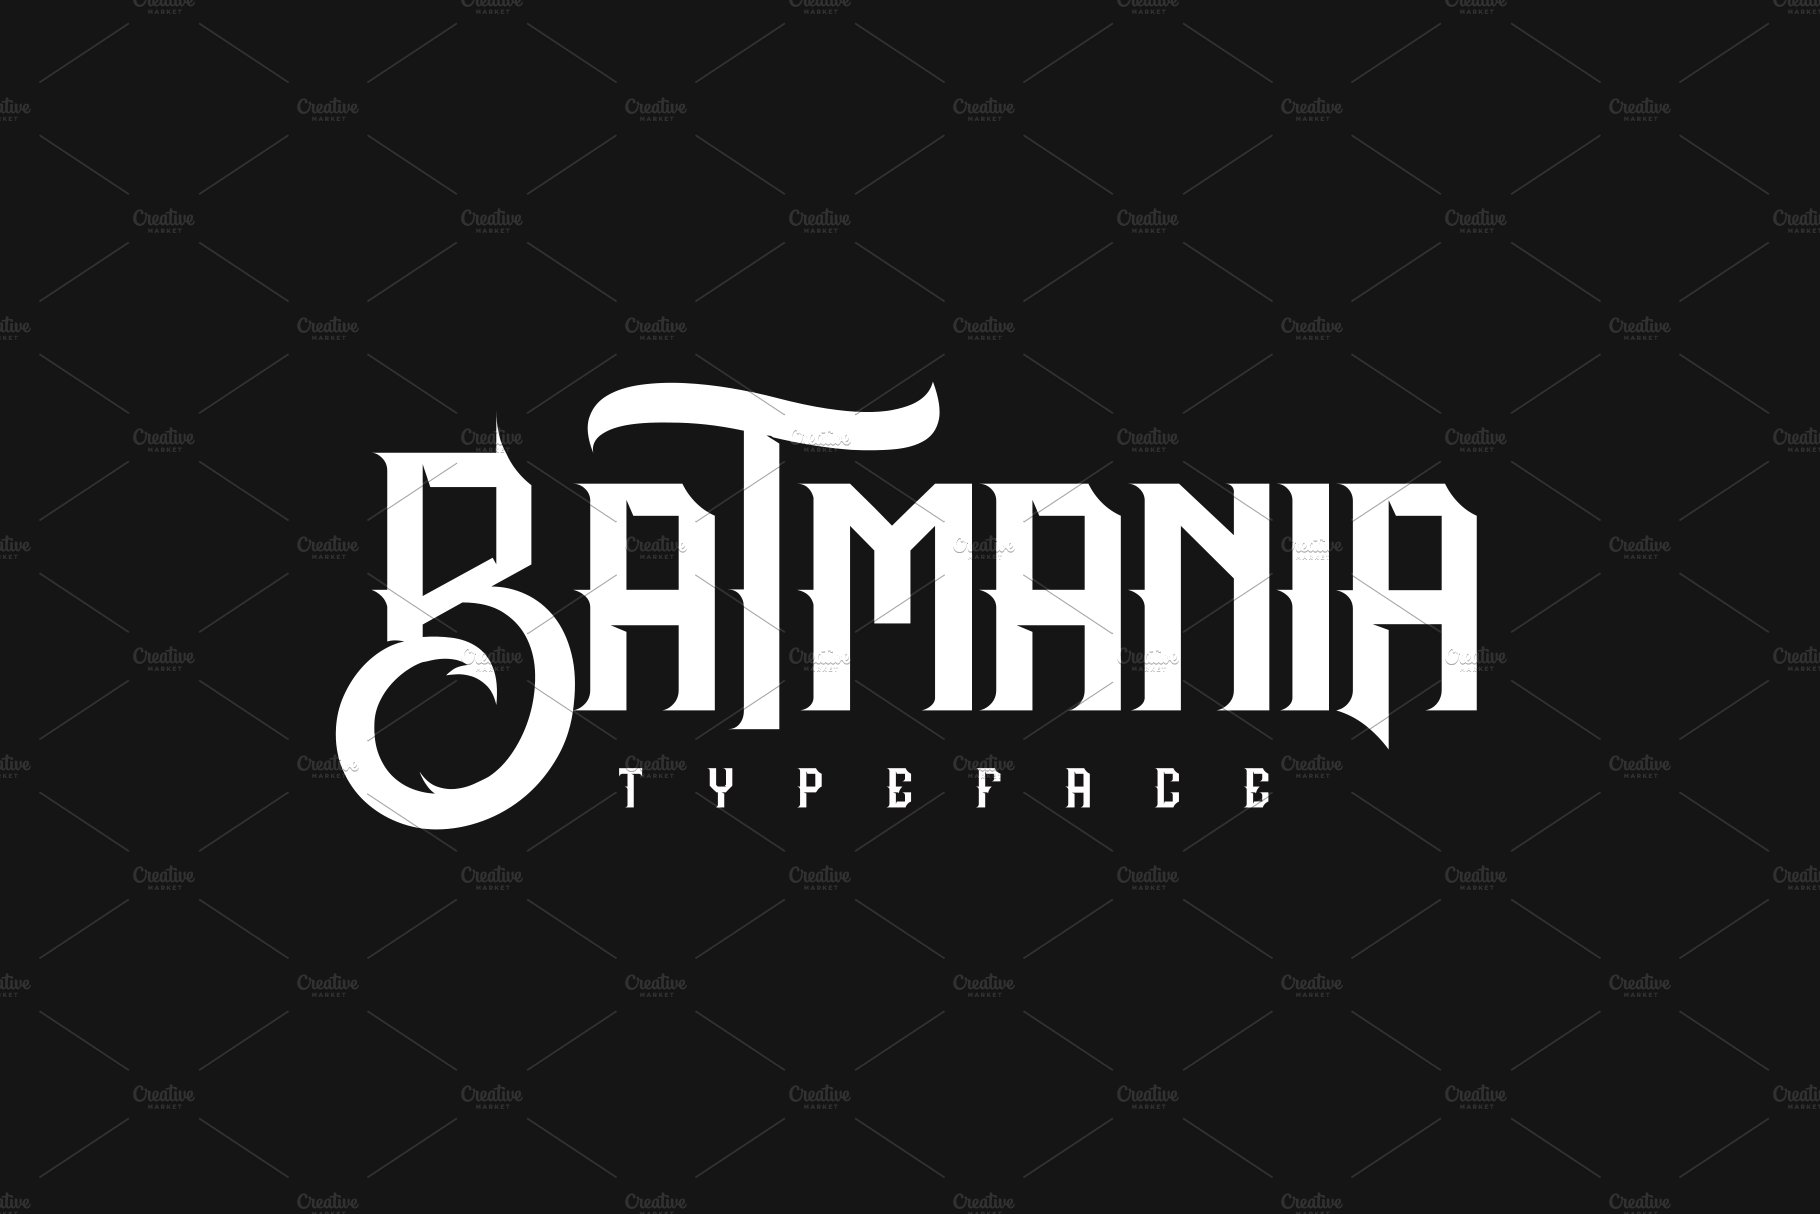 BATMANIA cover image.